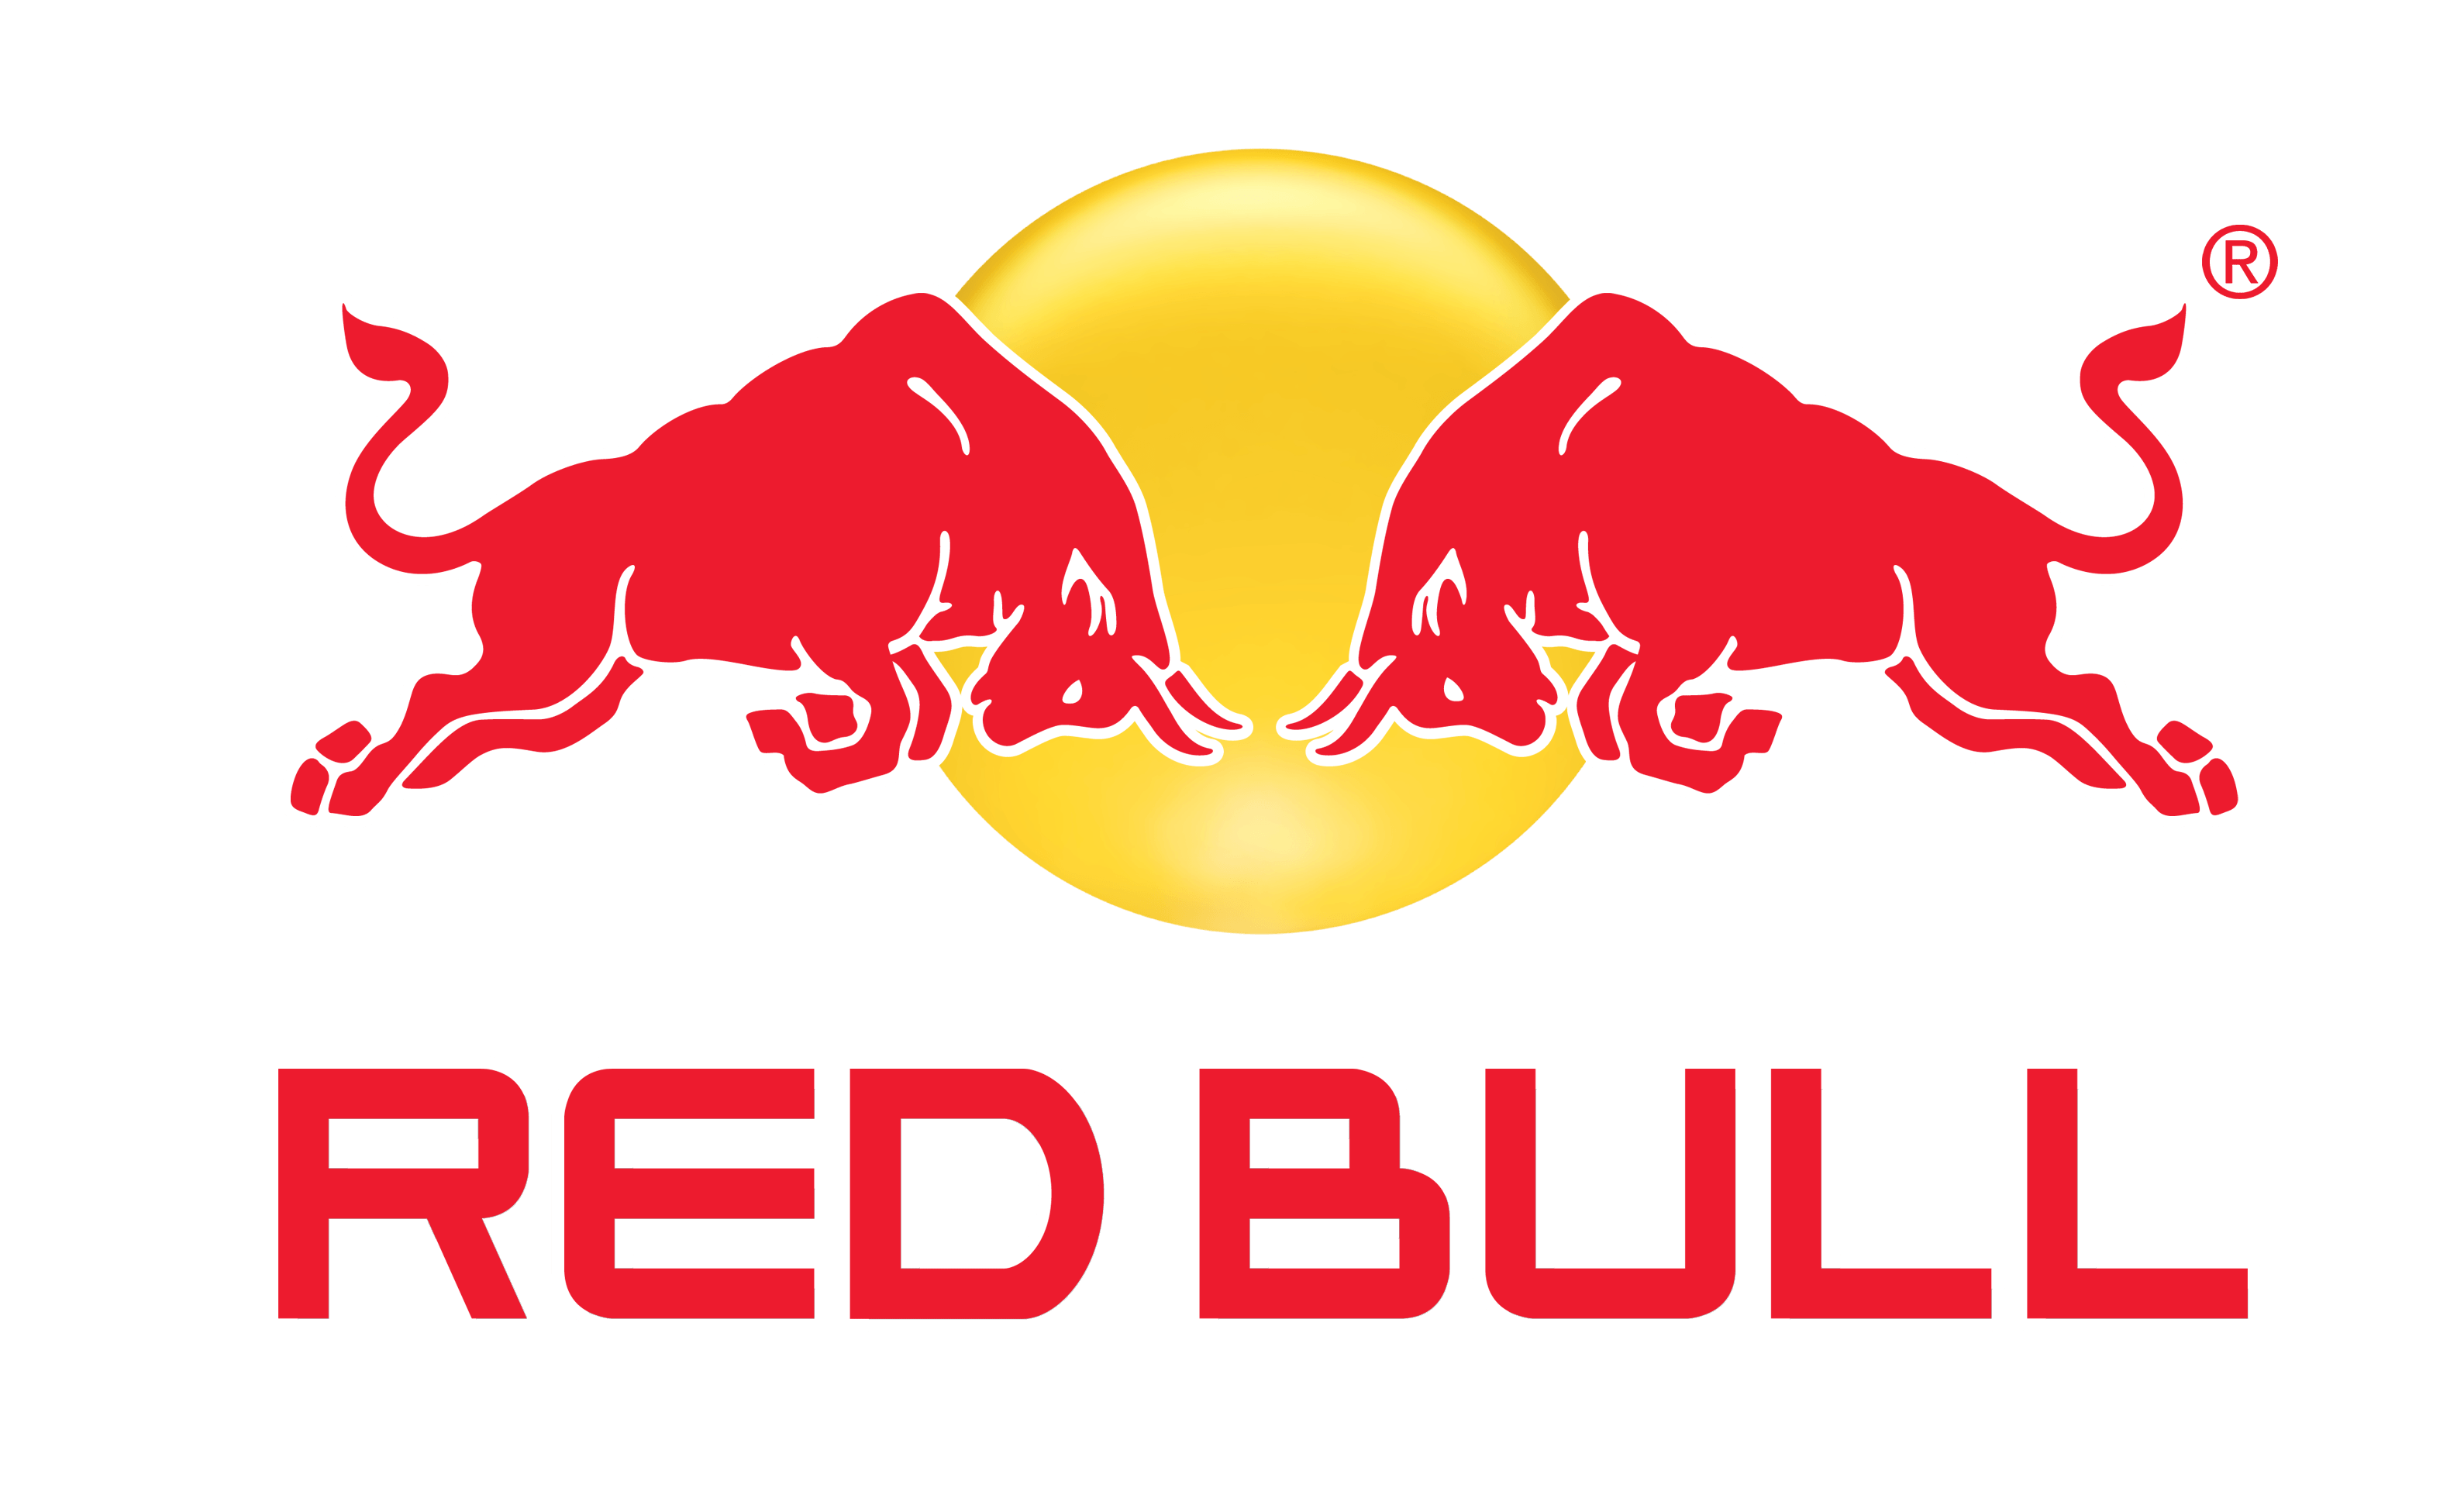 Red Bul Logo - Free Download Red Bull Logo Wallpapers | PixelsTalk.Net